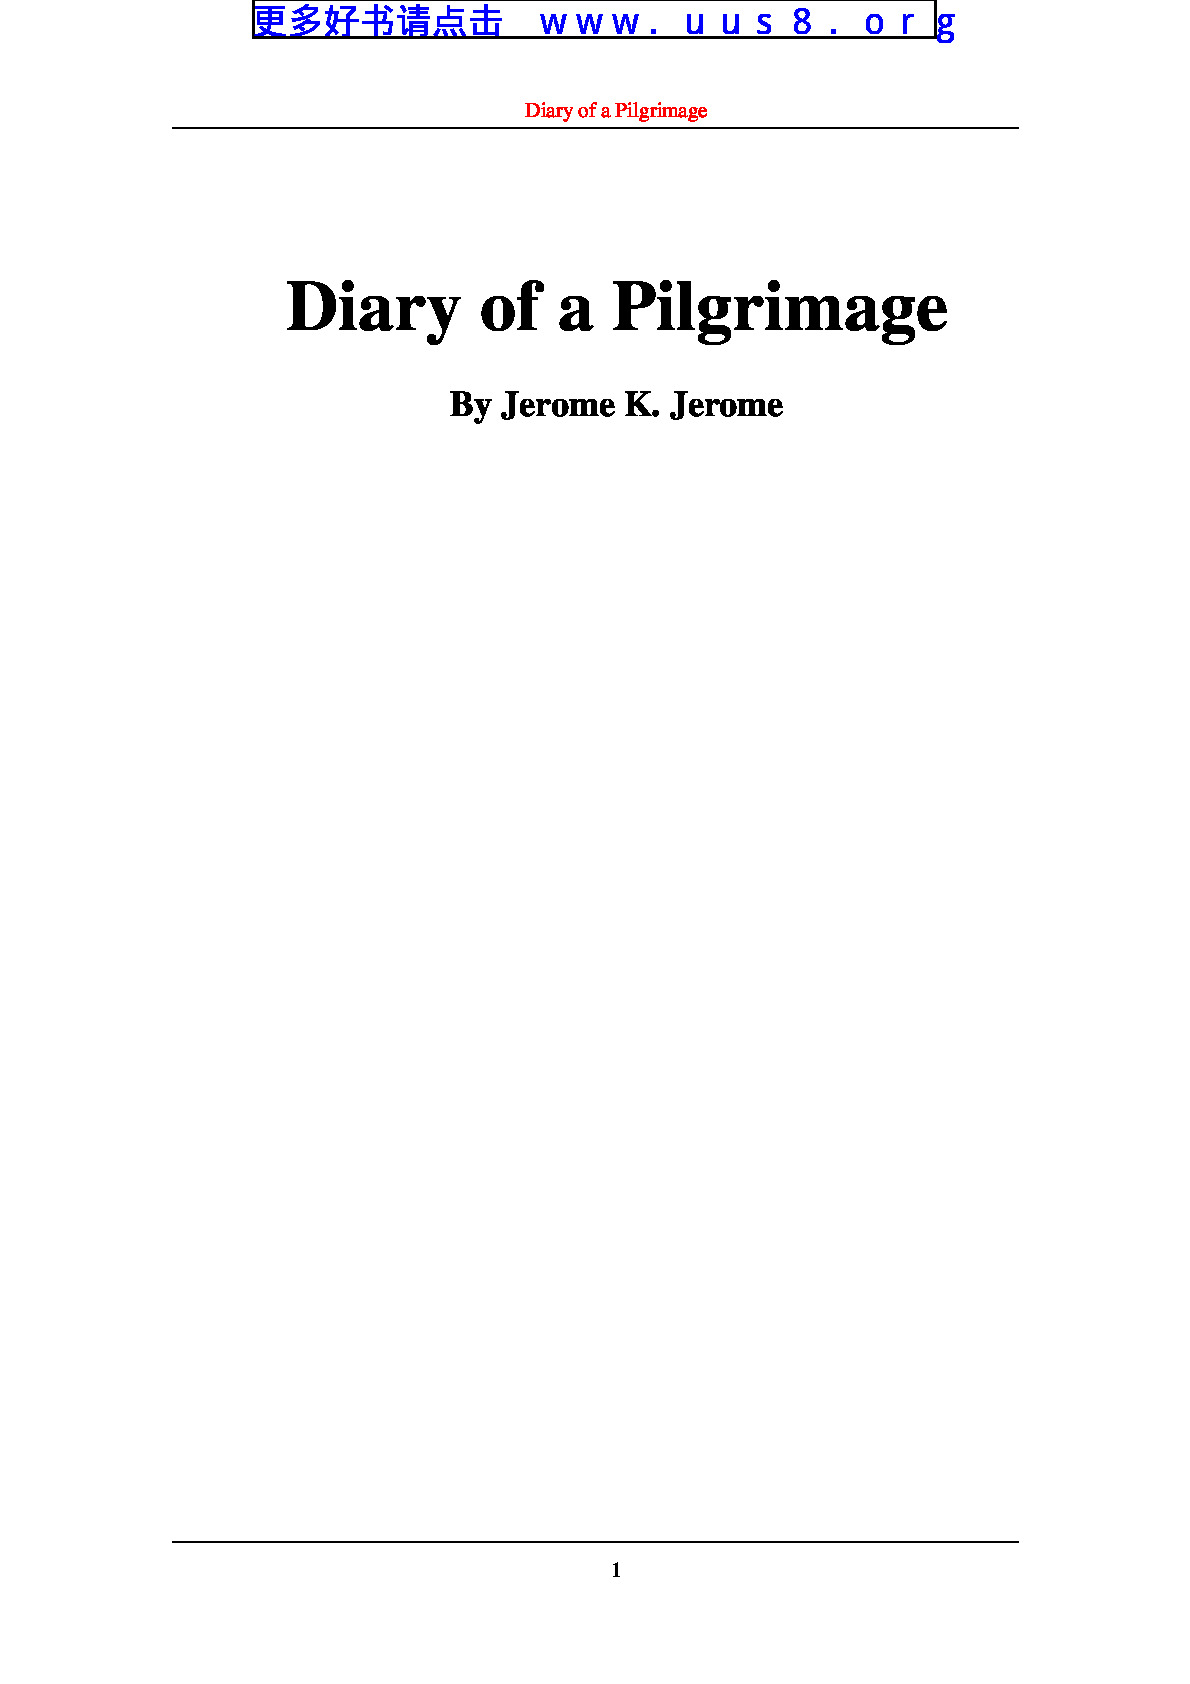 Diary_of_a_Pilgrimage(朝圣路日记)